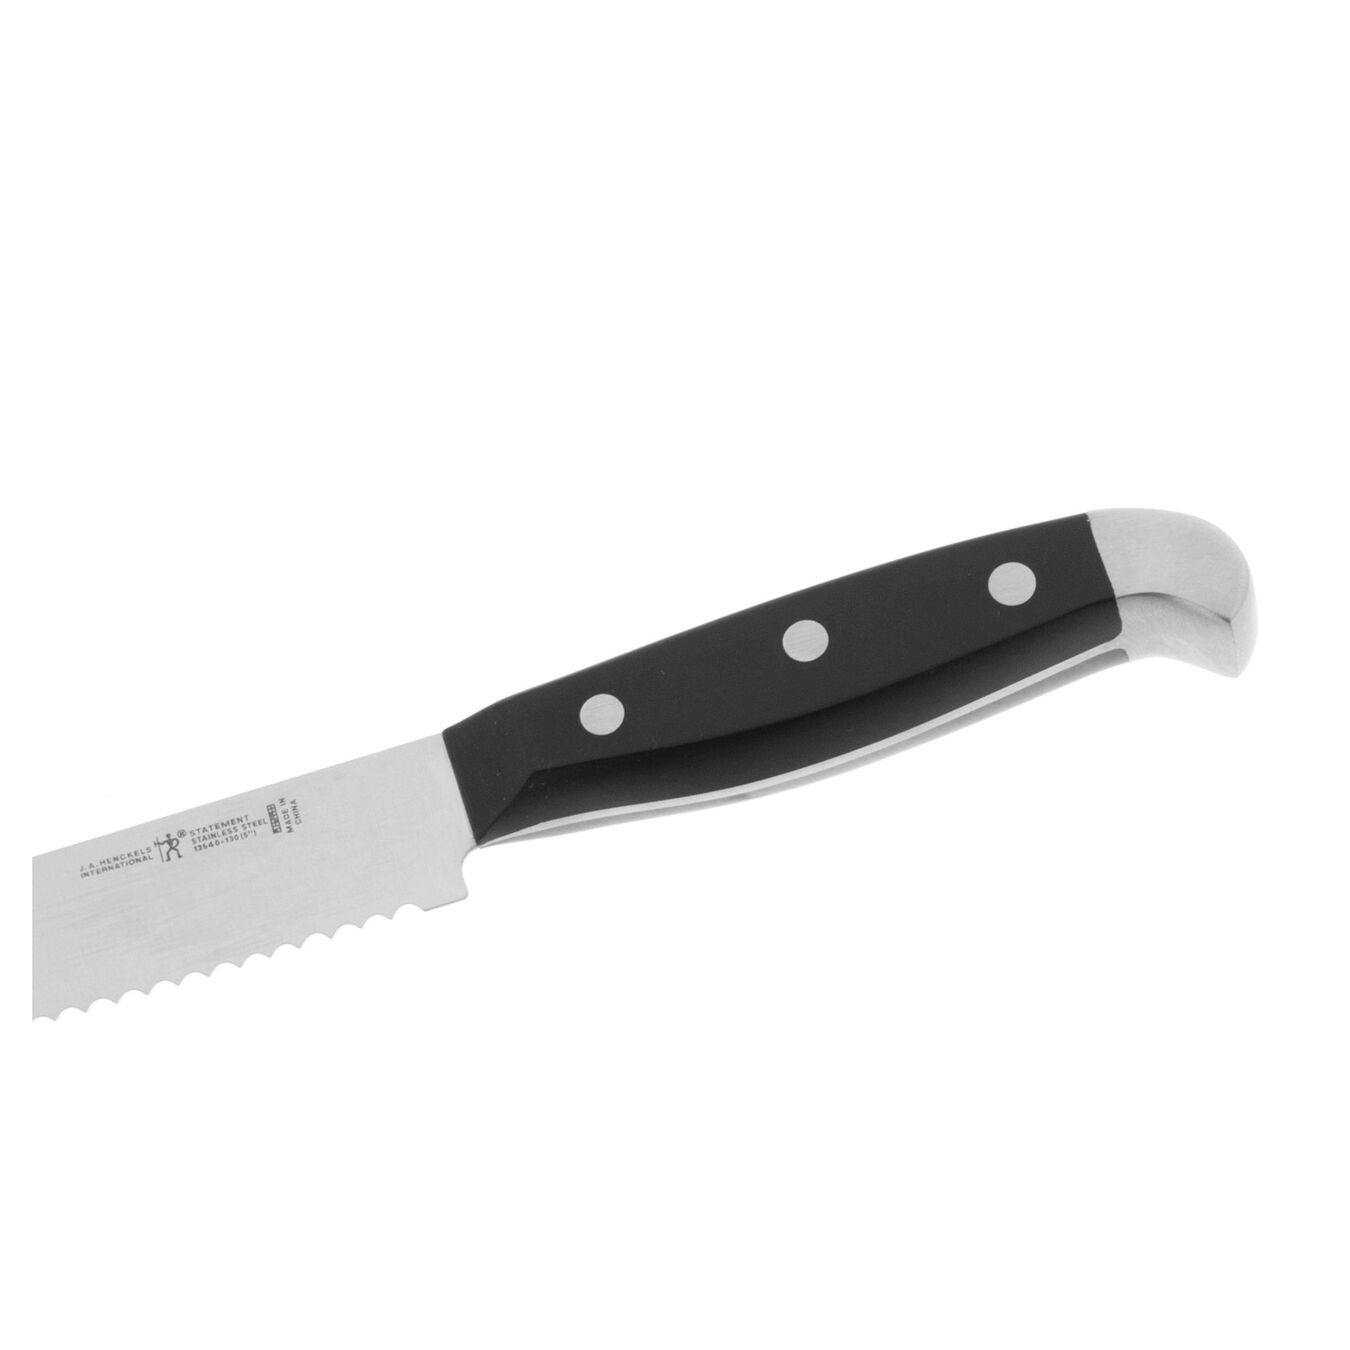 Henckels Statement 5-inch Serrated Utility Knife